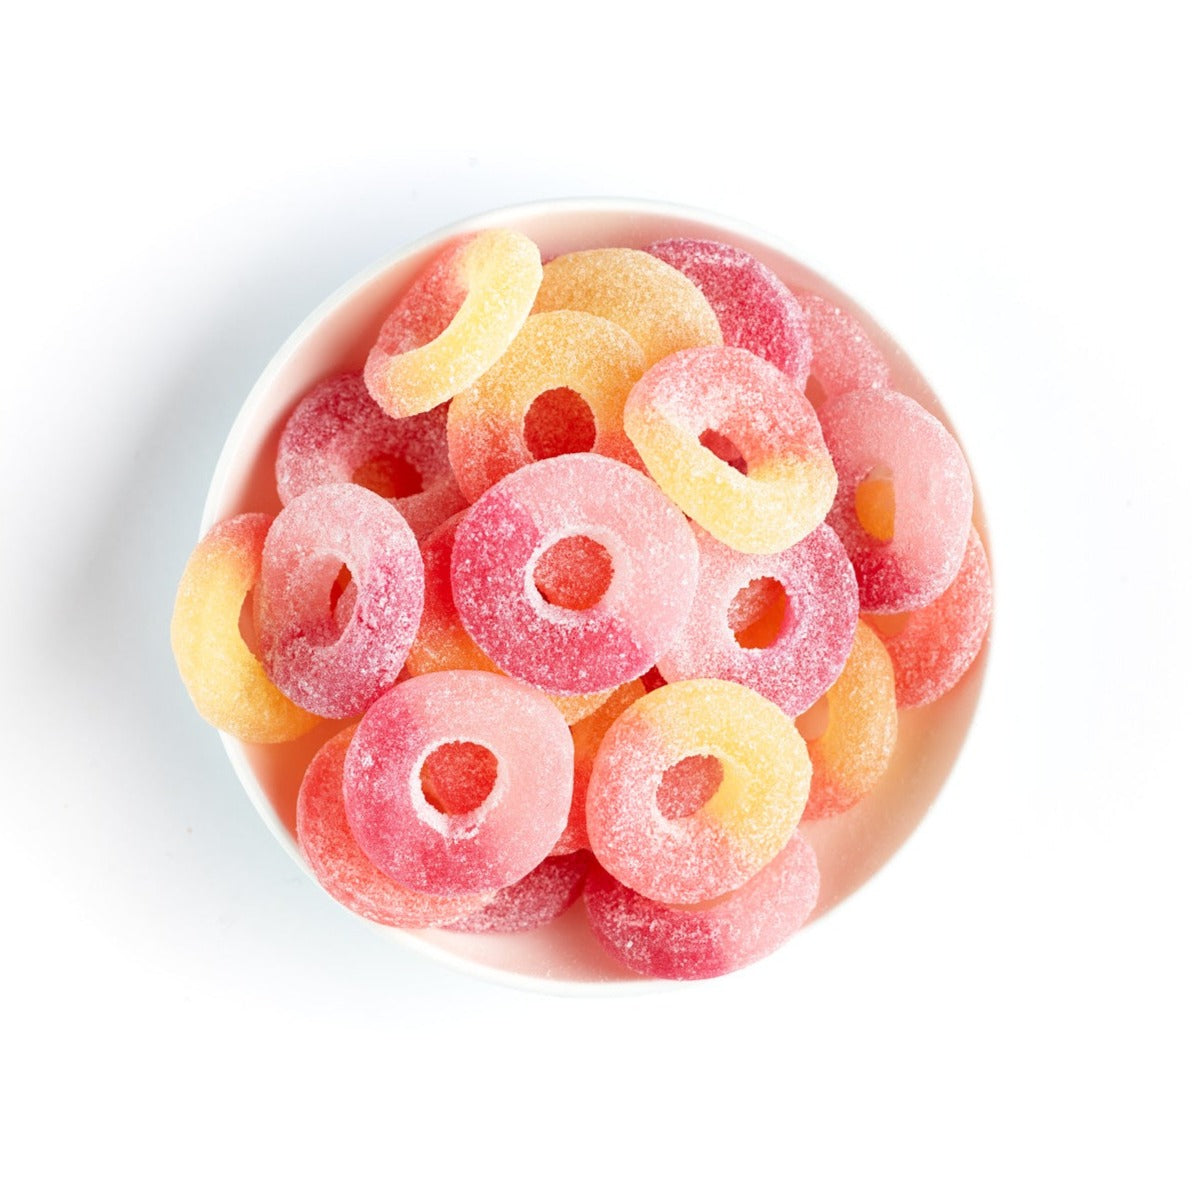 Tutti Frutti Rings 100g